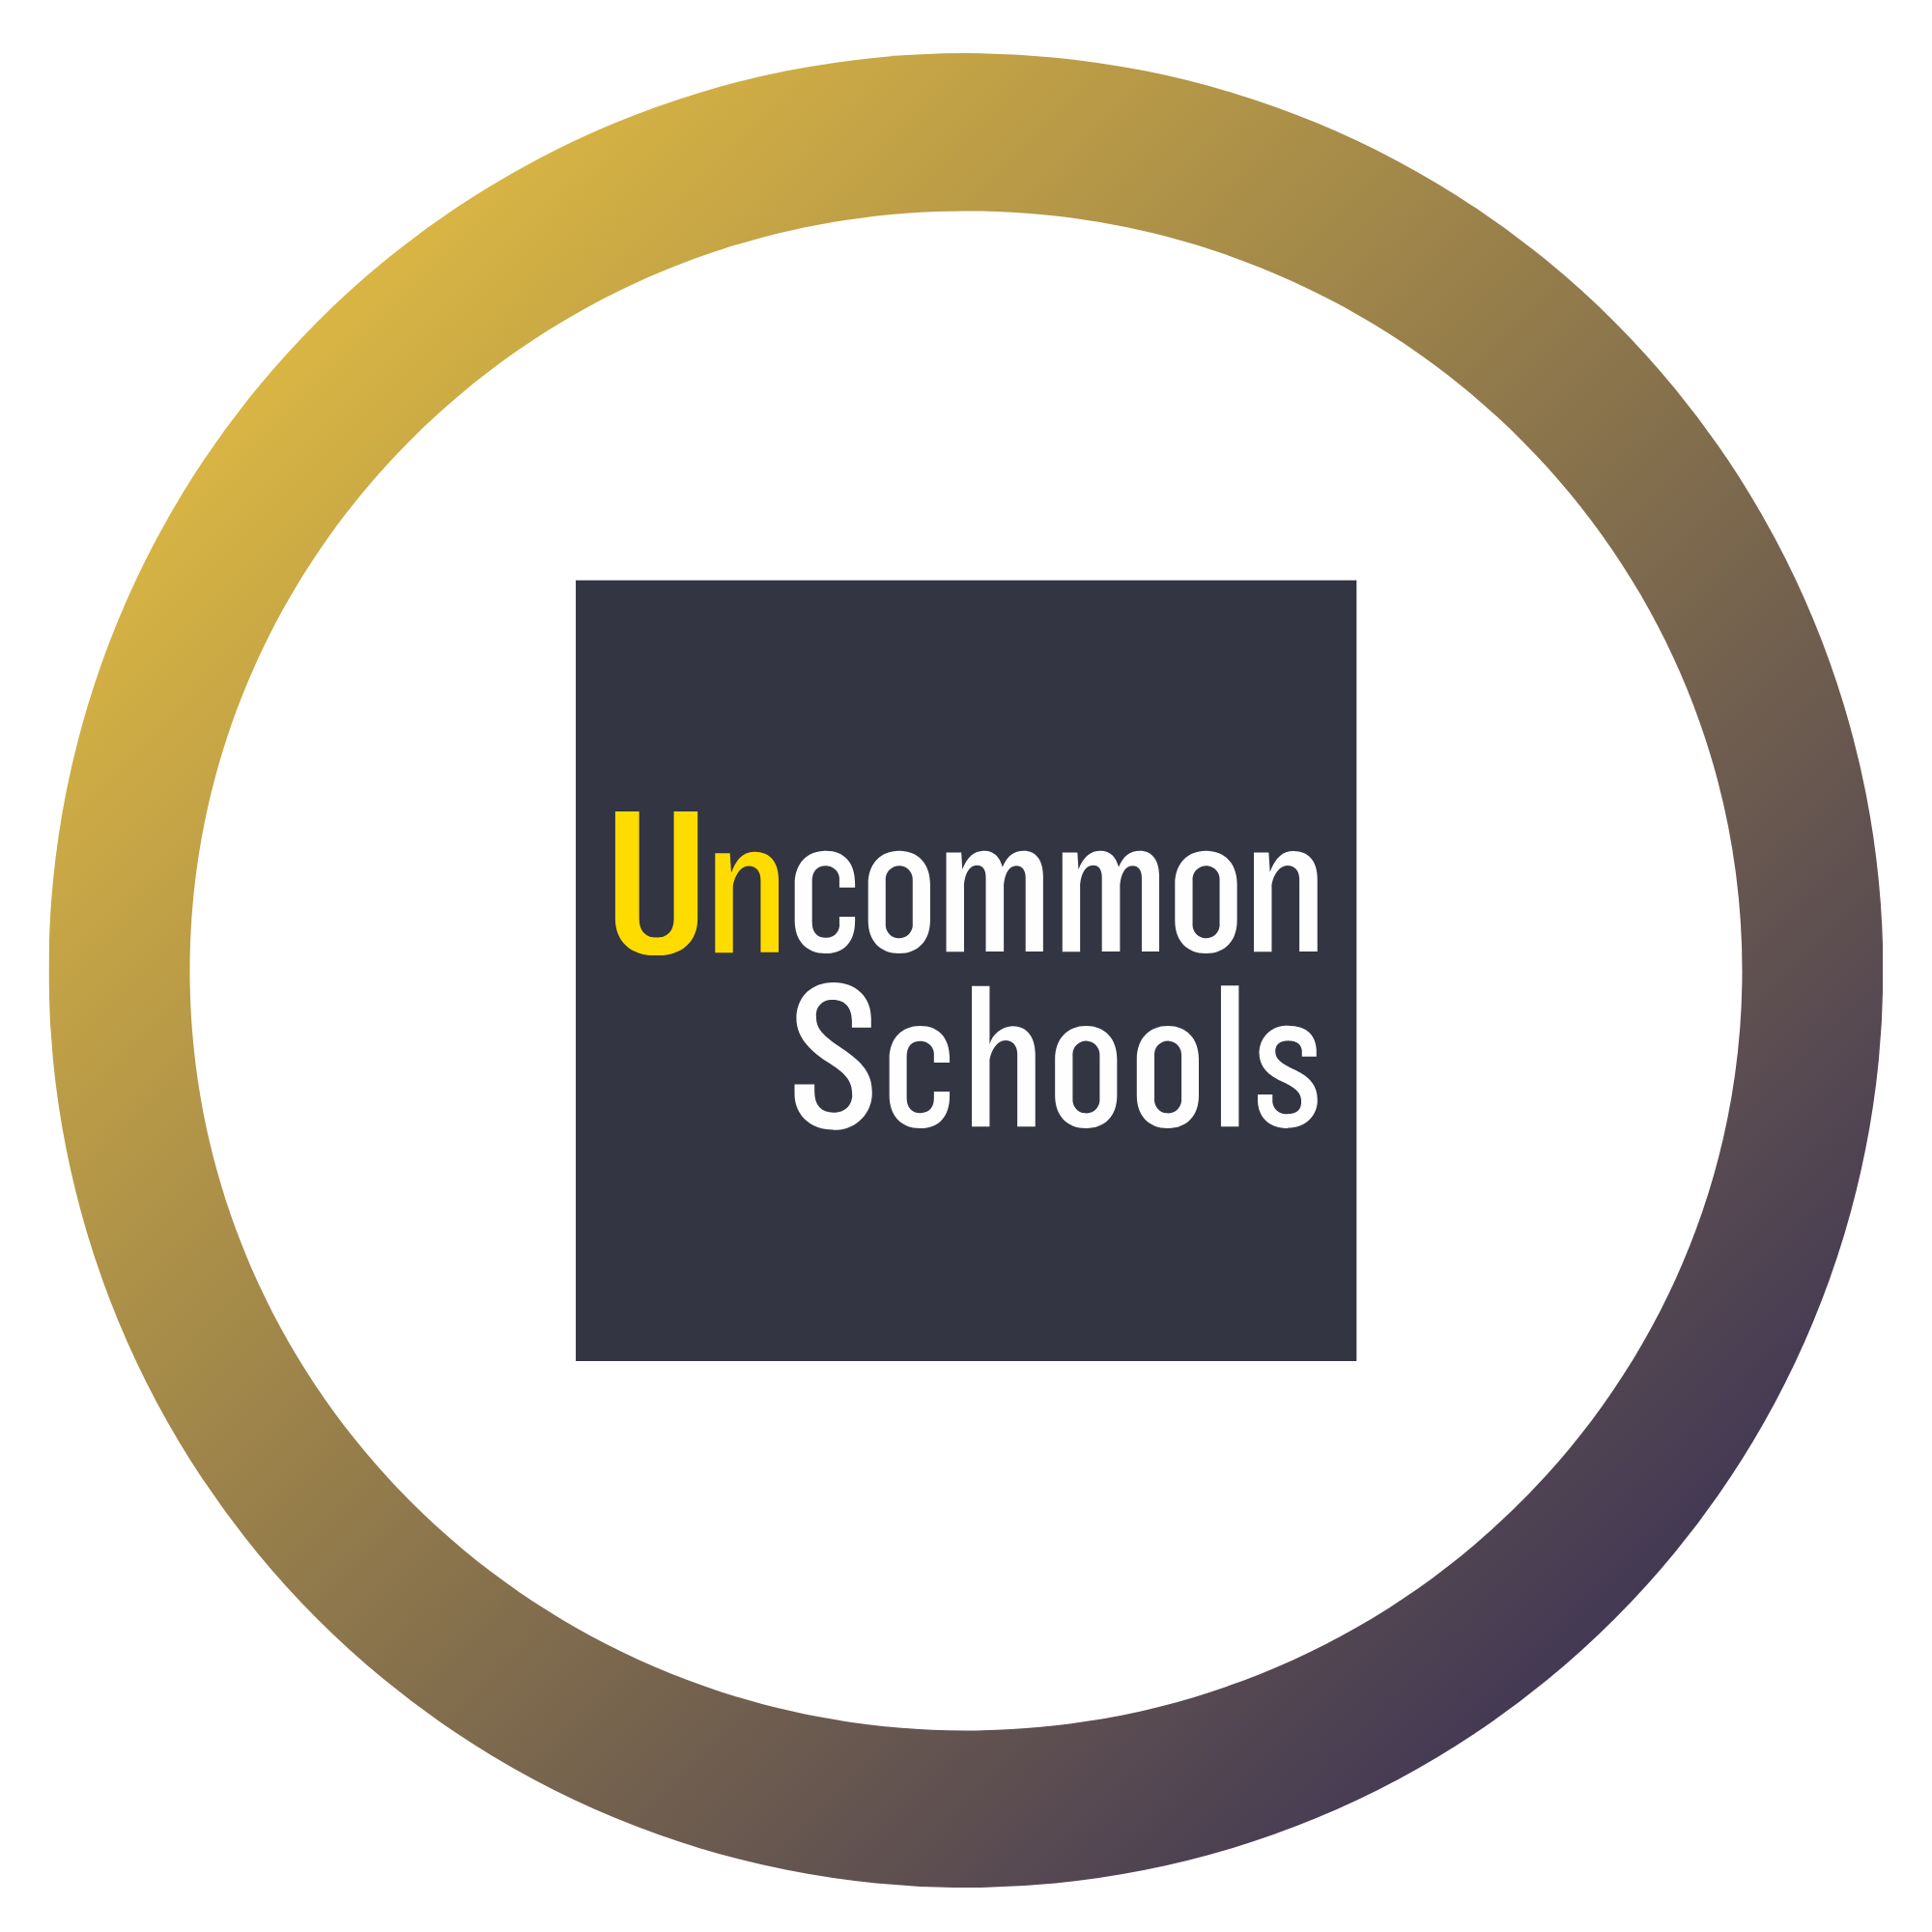 Uncommon Schools is a Campus Forward Award Winner 2022